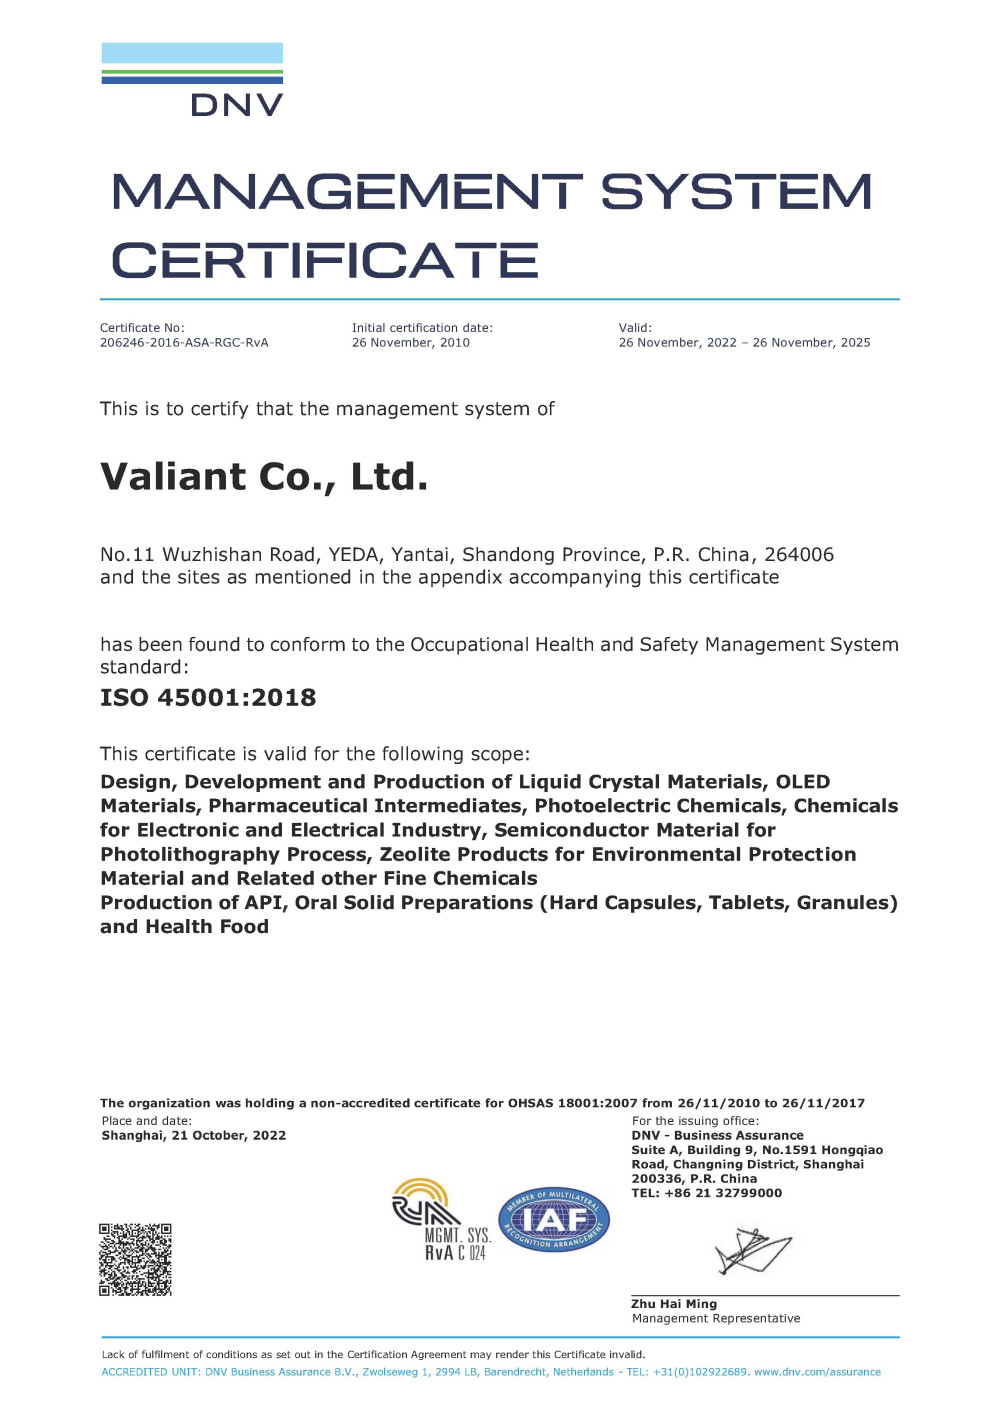 ISO 45001:2018职业健康安全管理体系认证证书